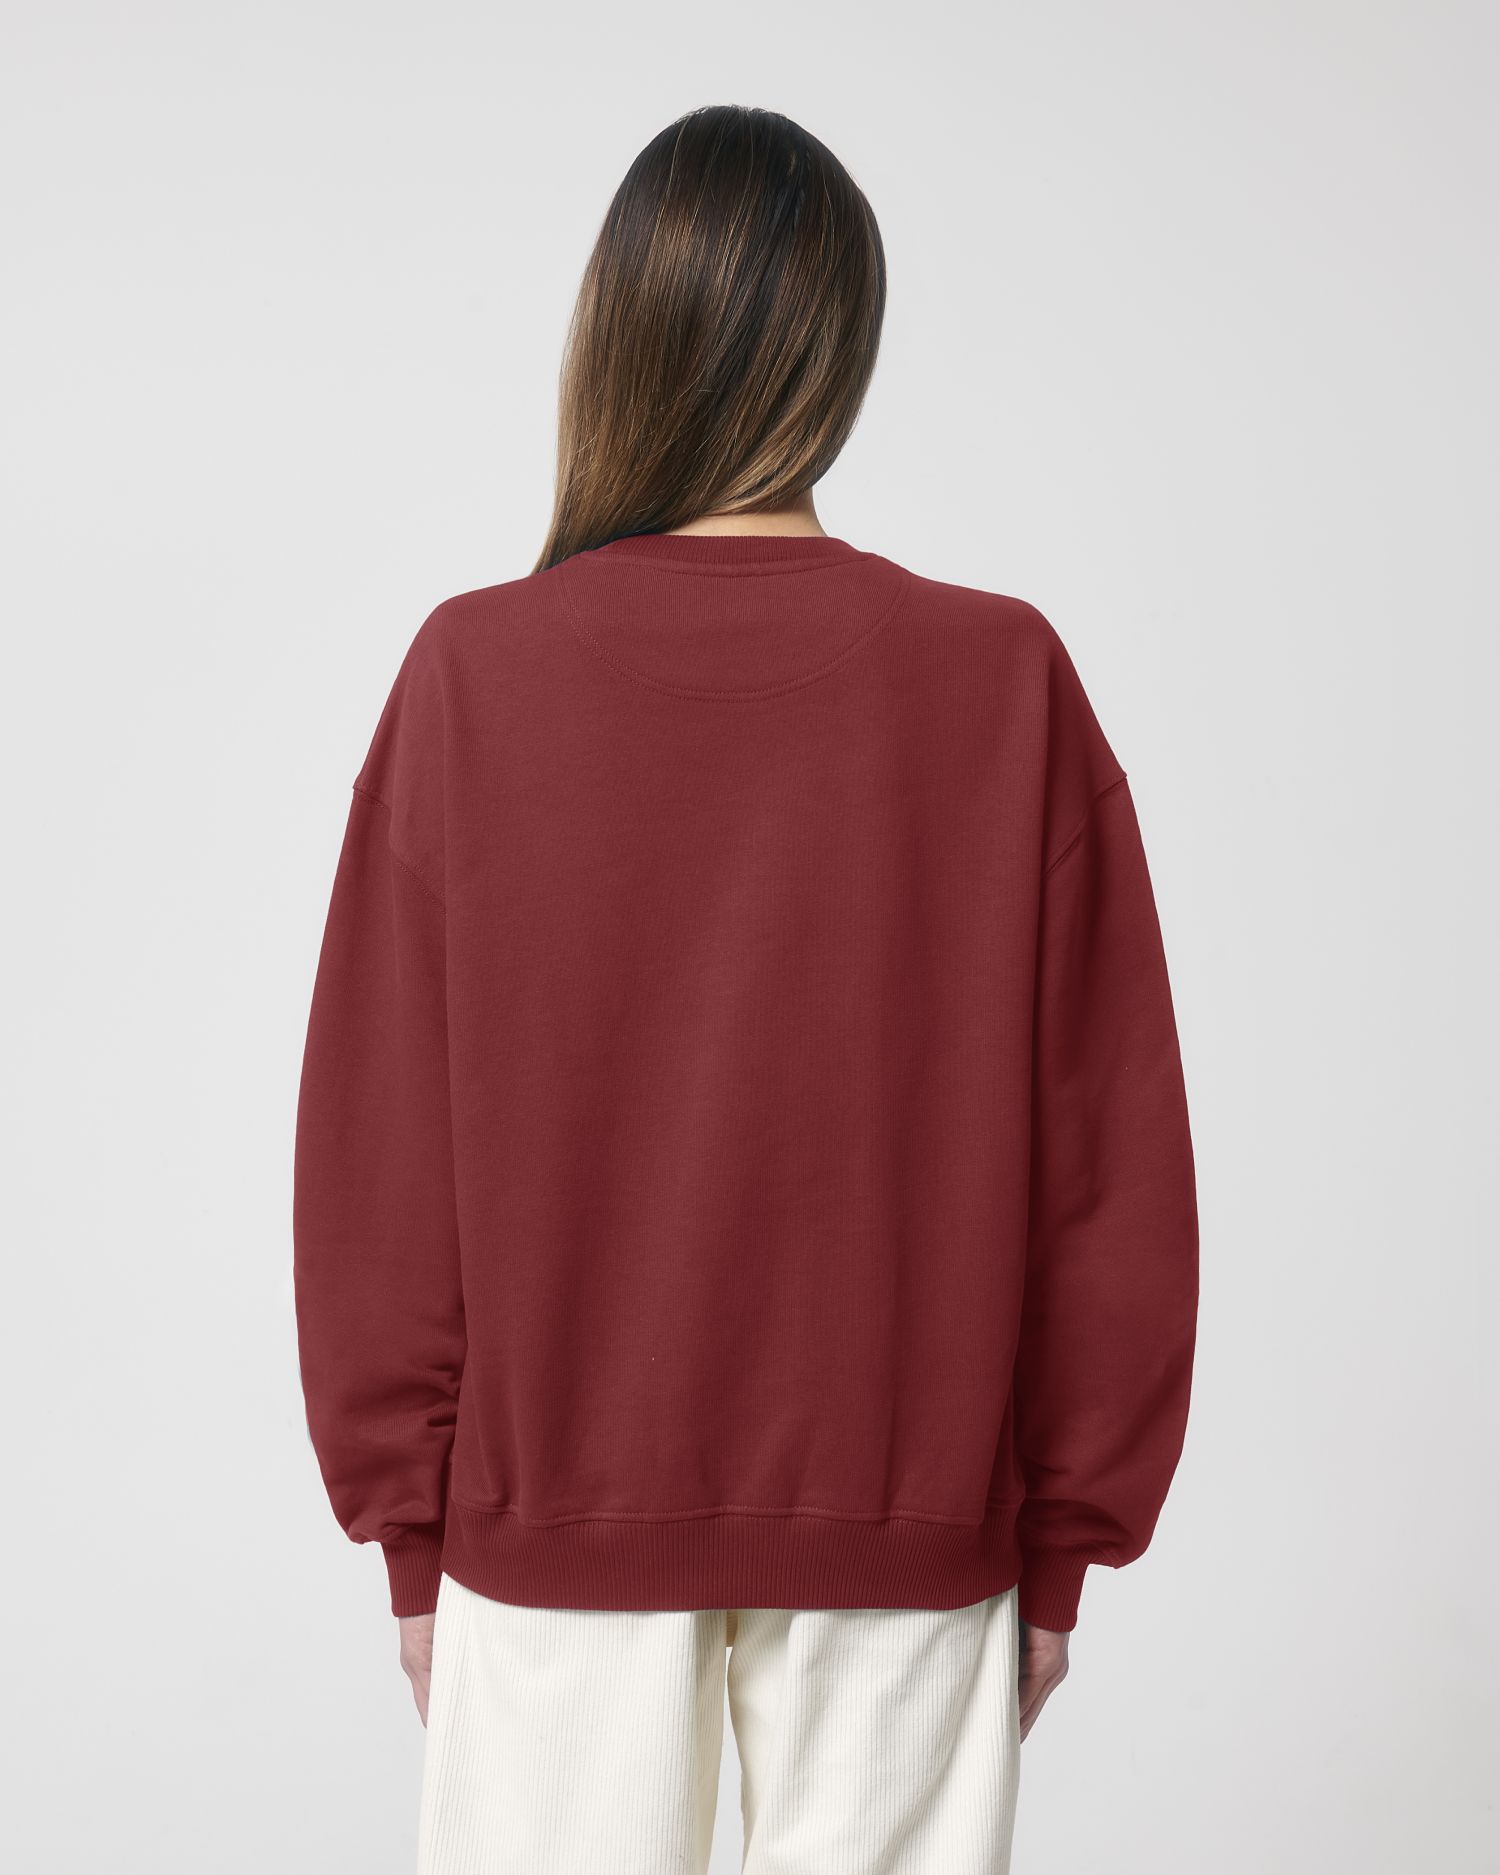 Be Famous Unisex Organic Oversized Sweatshirt Dry Hand Feel Red Earth 3XL